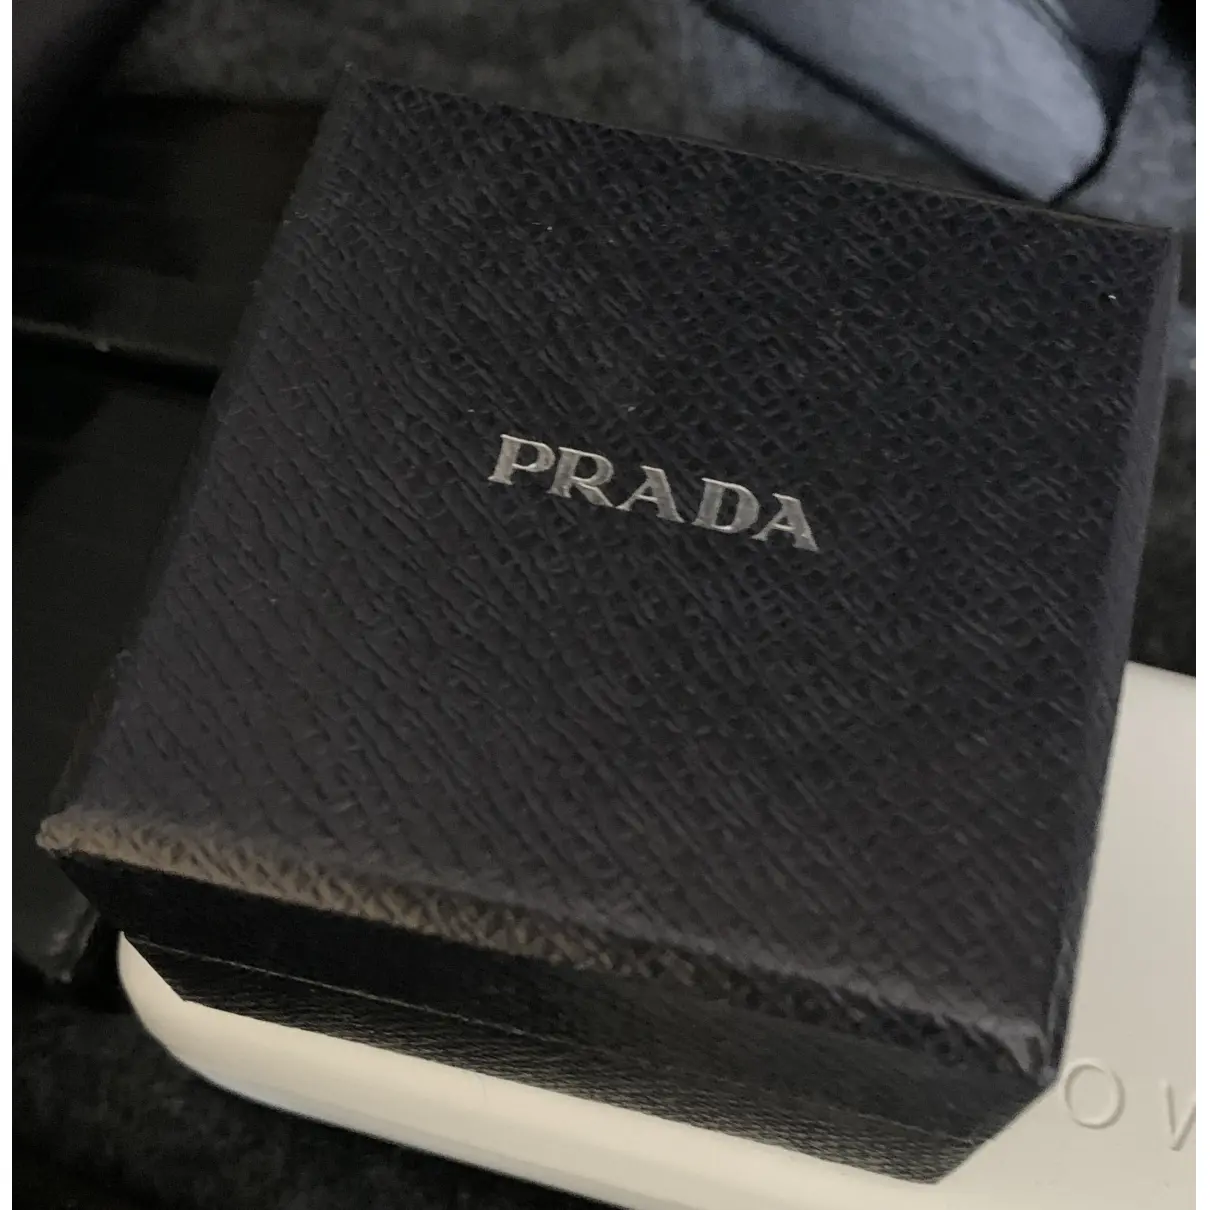 Buy Prada Cufflinks online